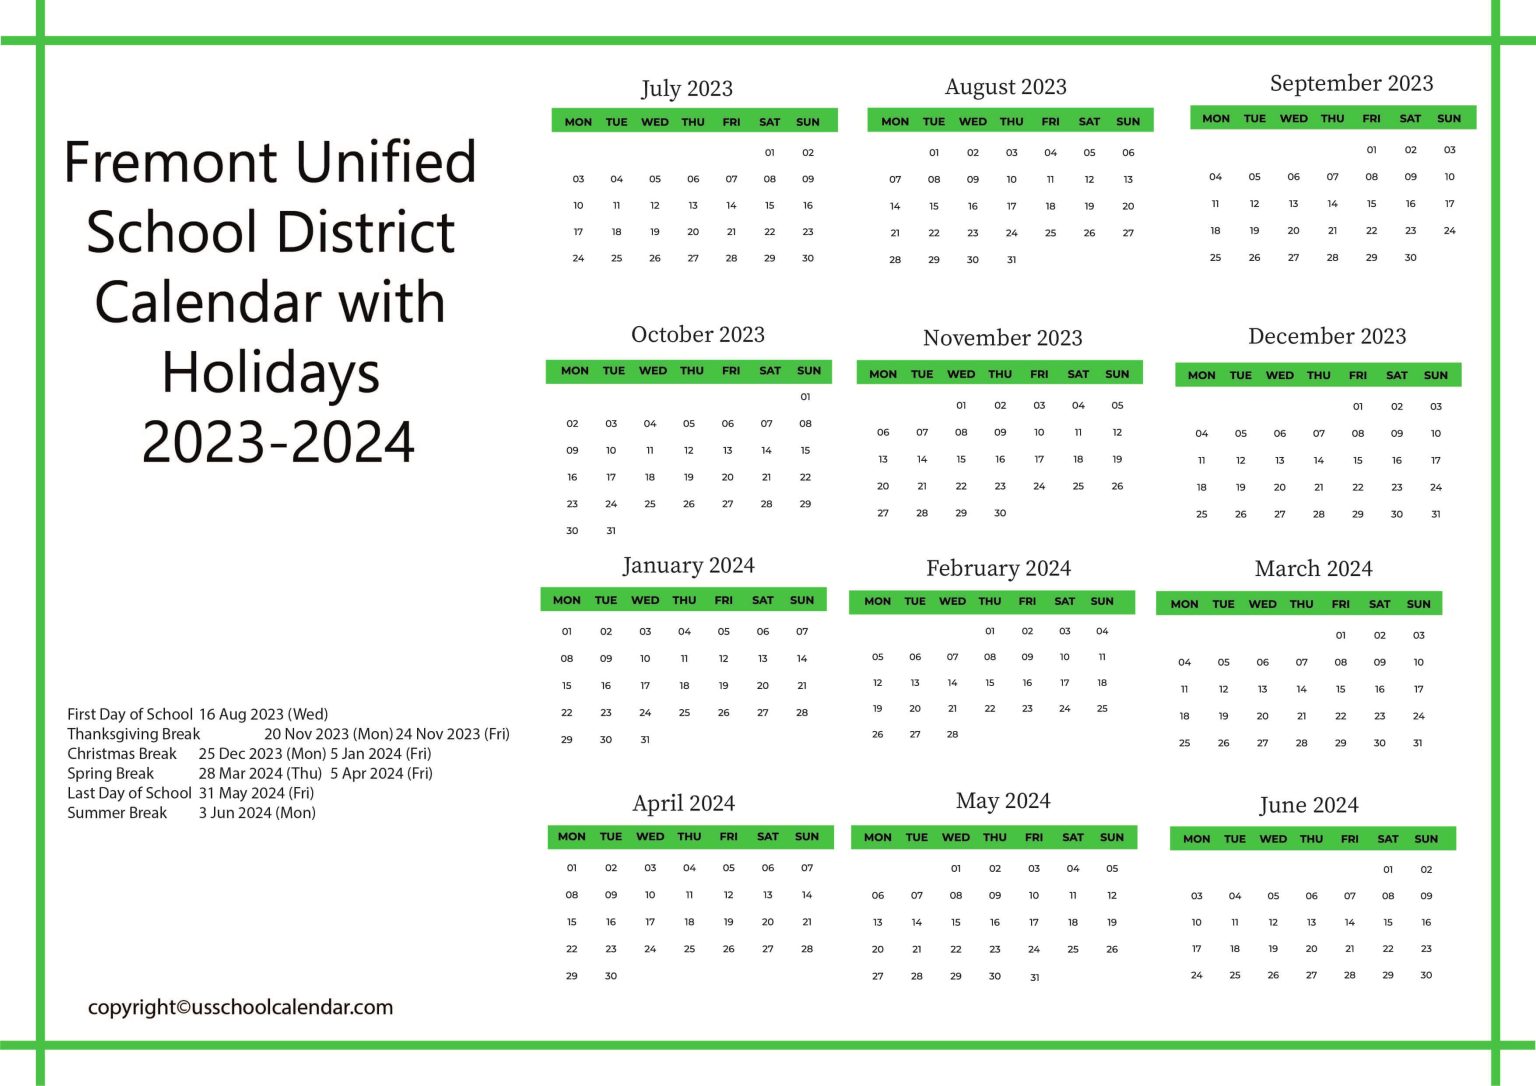 Fremont Unified School District Calendar Holidays 202324 [FUSD]